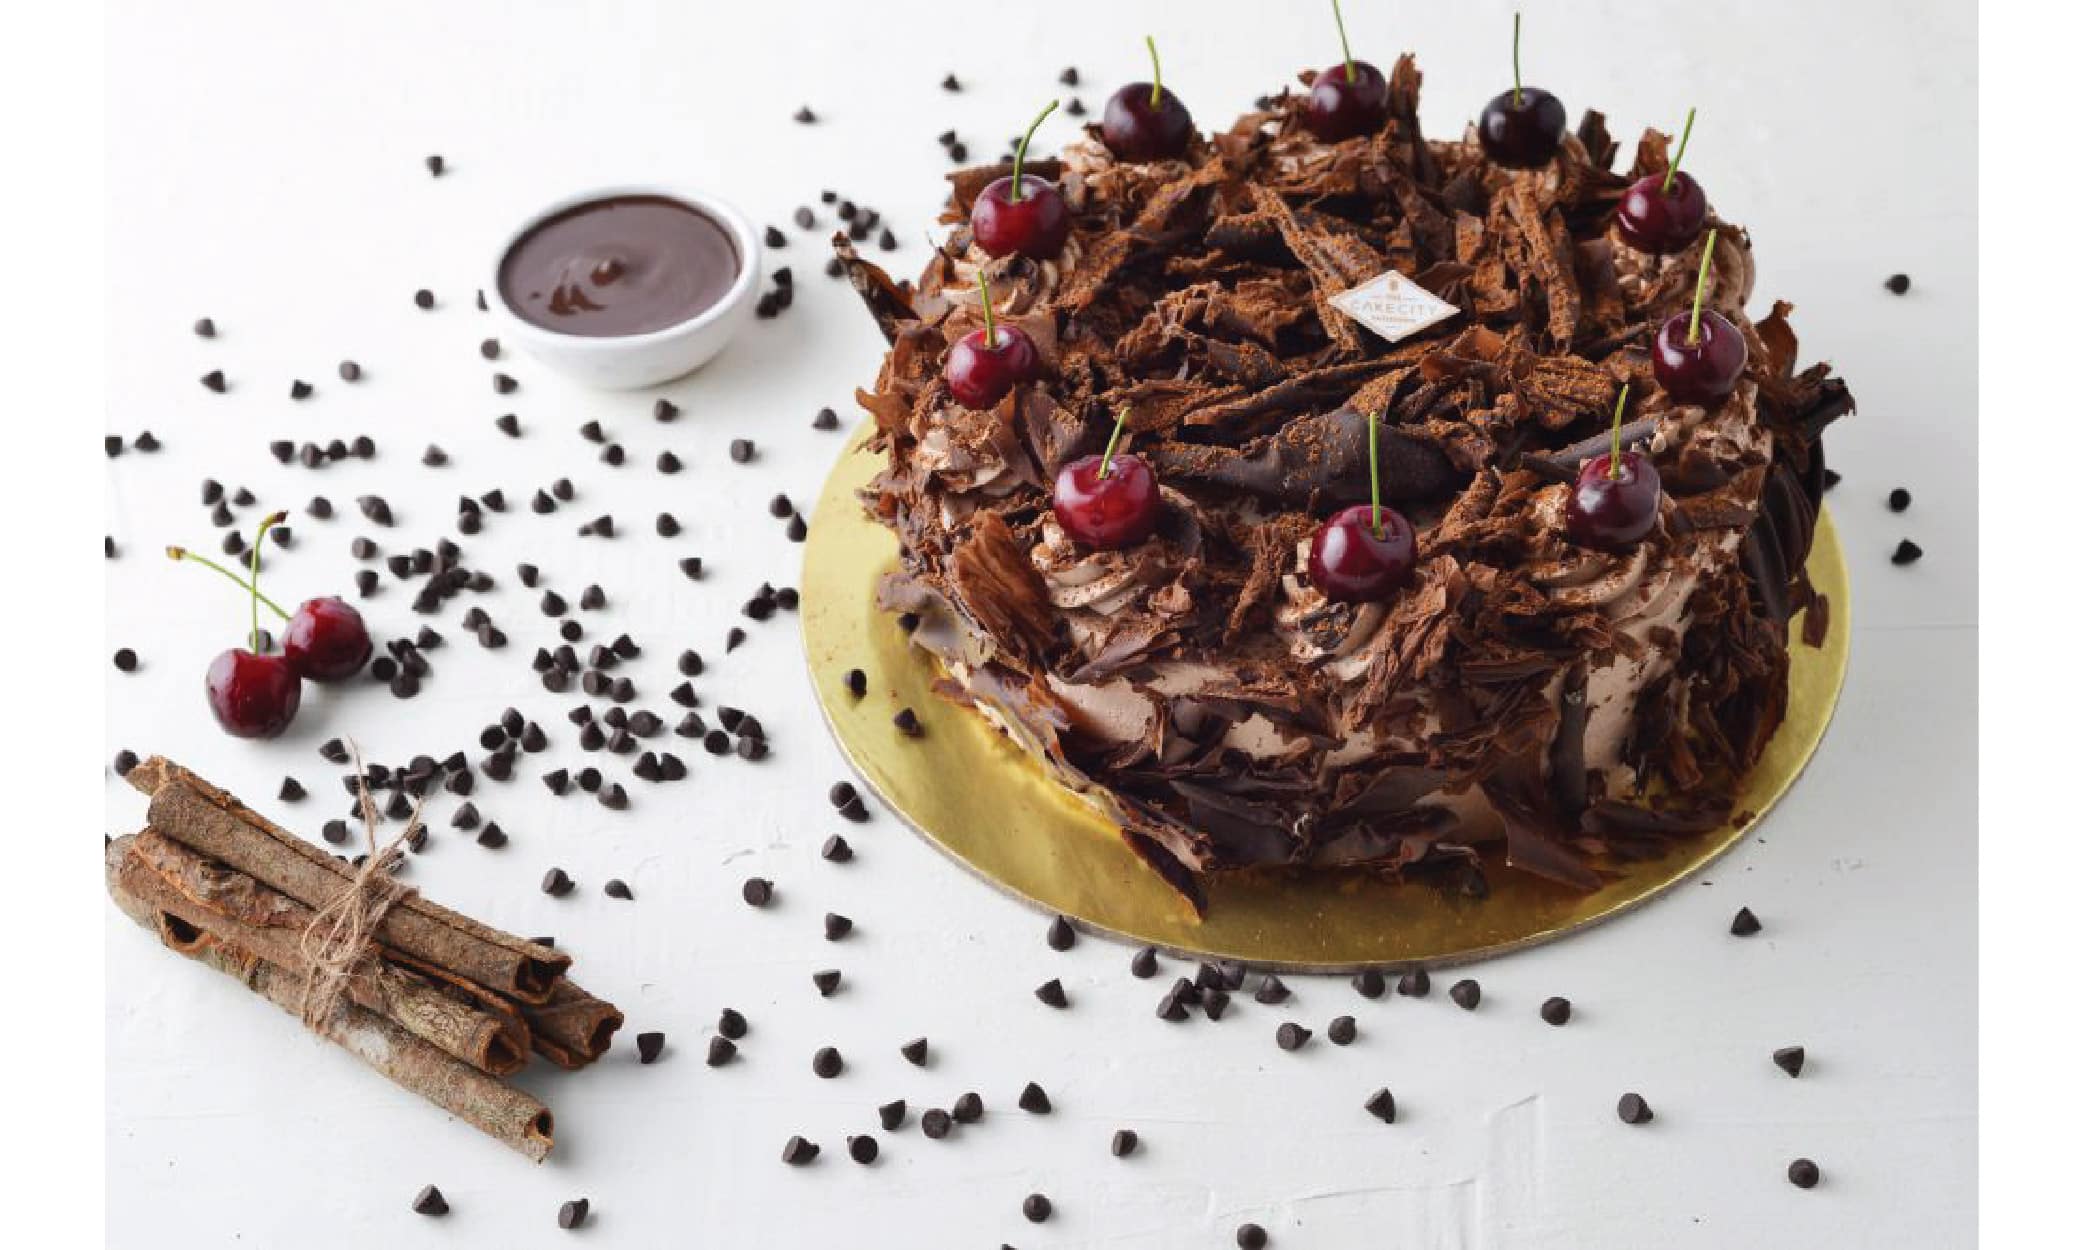 Best Black Forest Cake In Delhi | Order Online